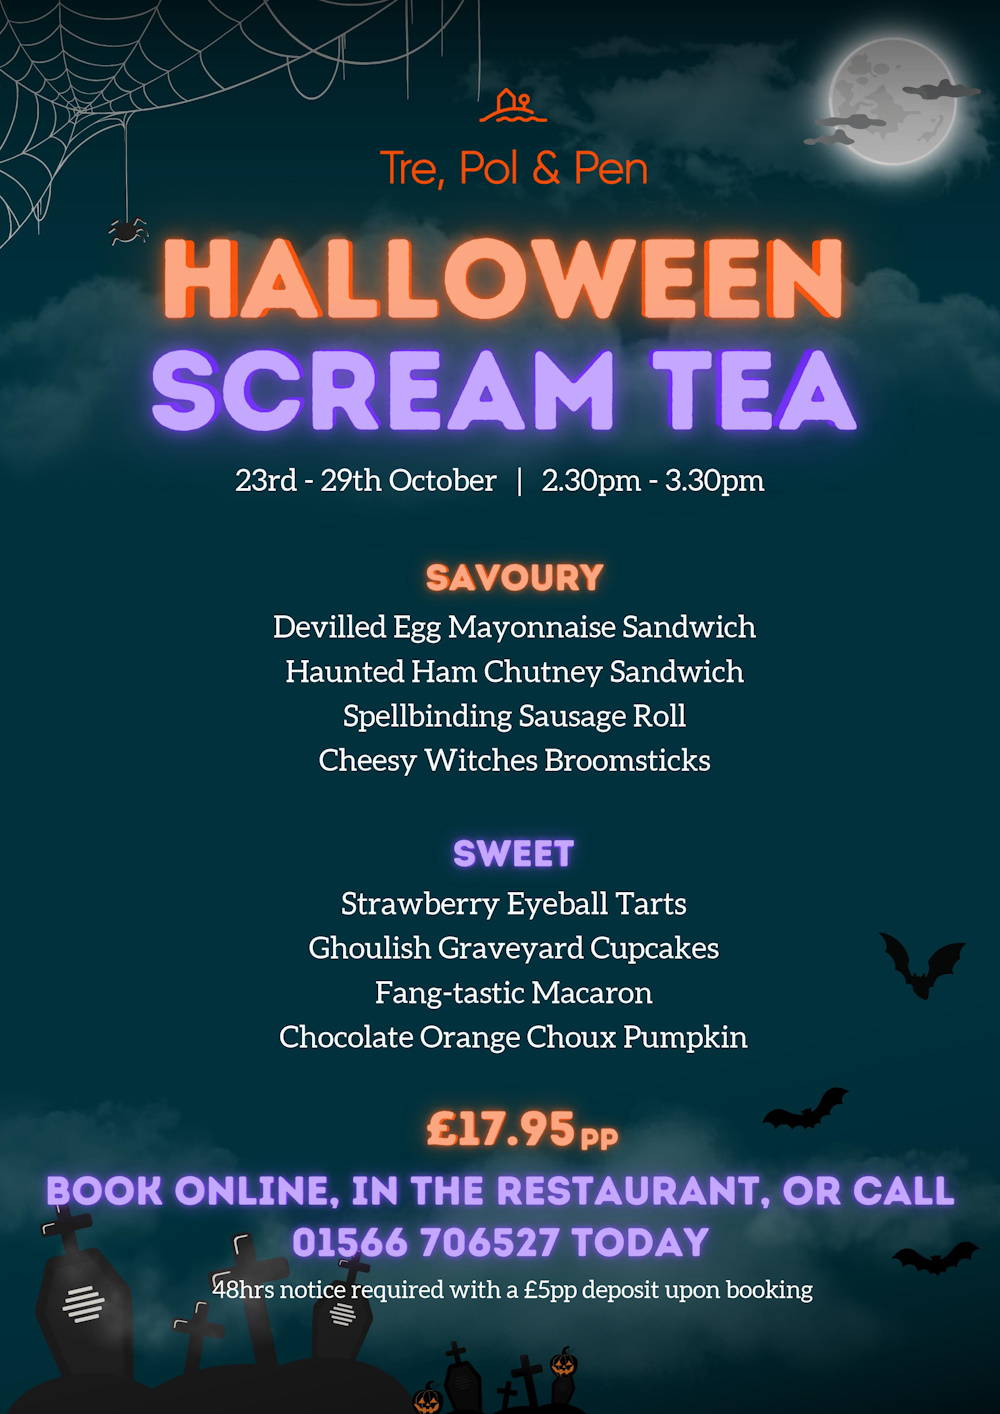 Halloween Scream Tea at Tre Pol & Pen